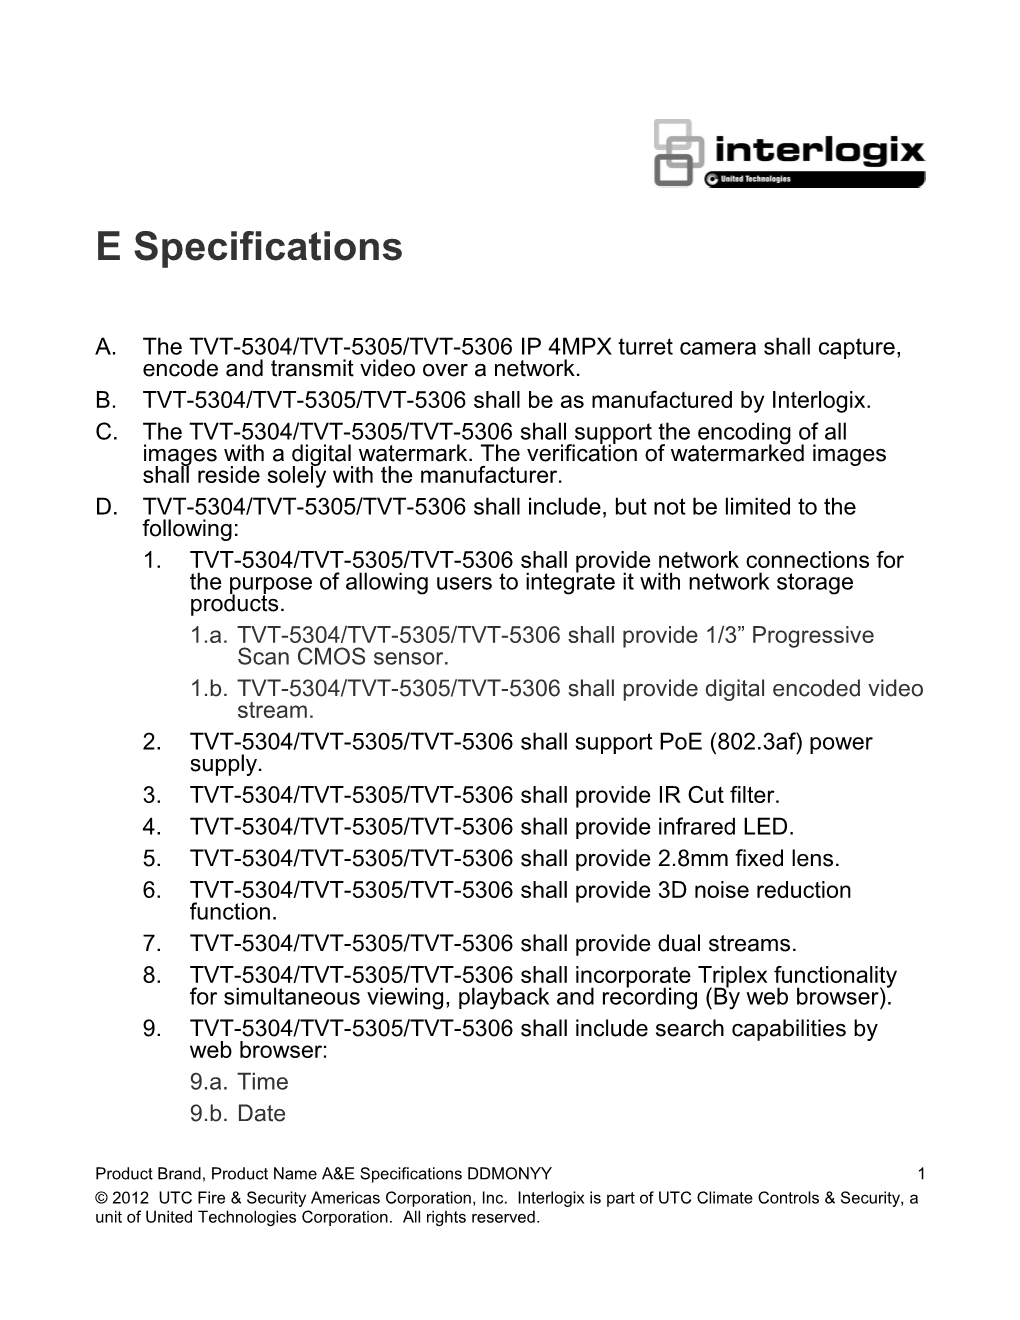 TVT-5304/TVT-5305/TVT-5306 H.264 IP 4MPX Turret Camera A&E Specifications